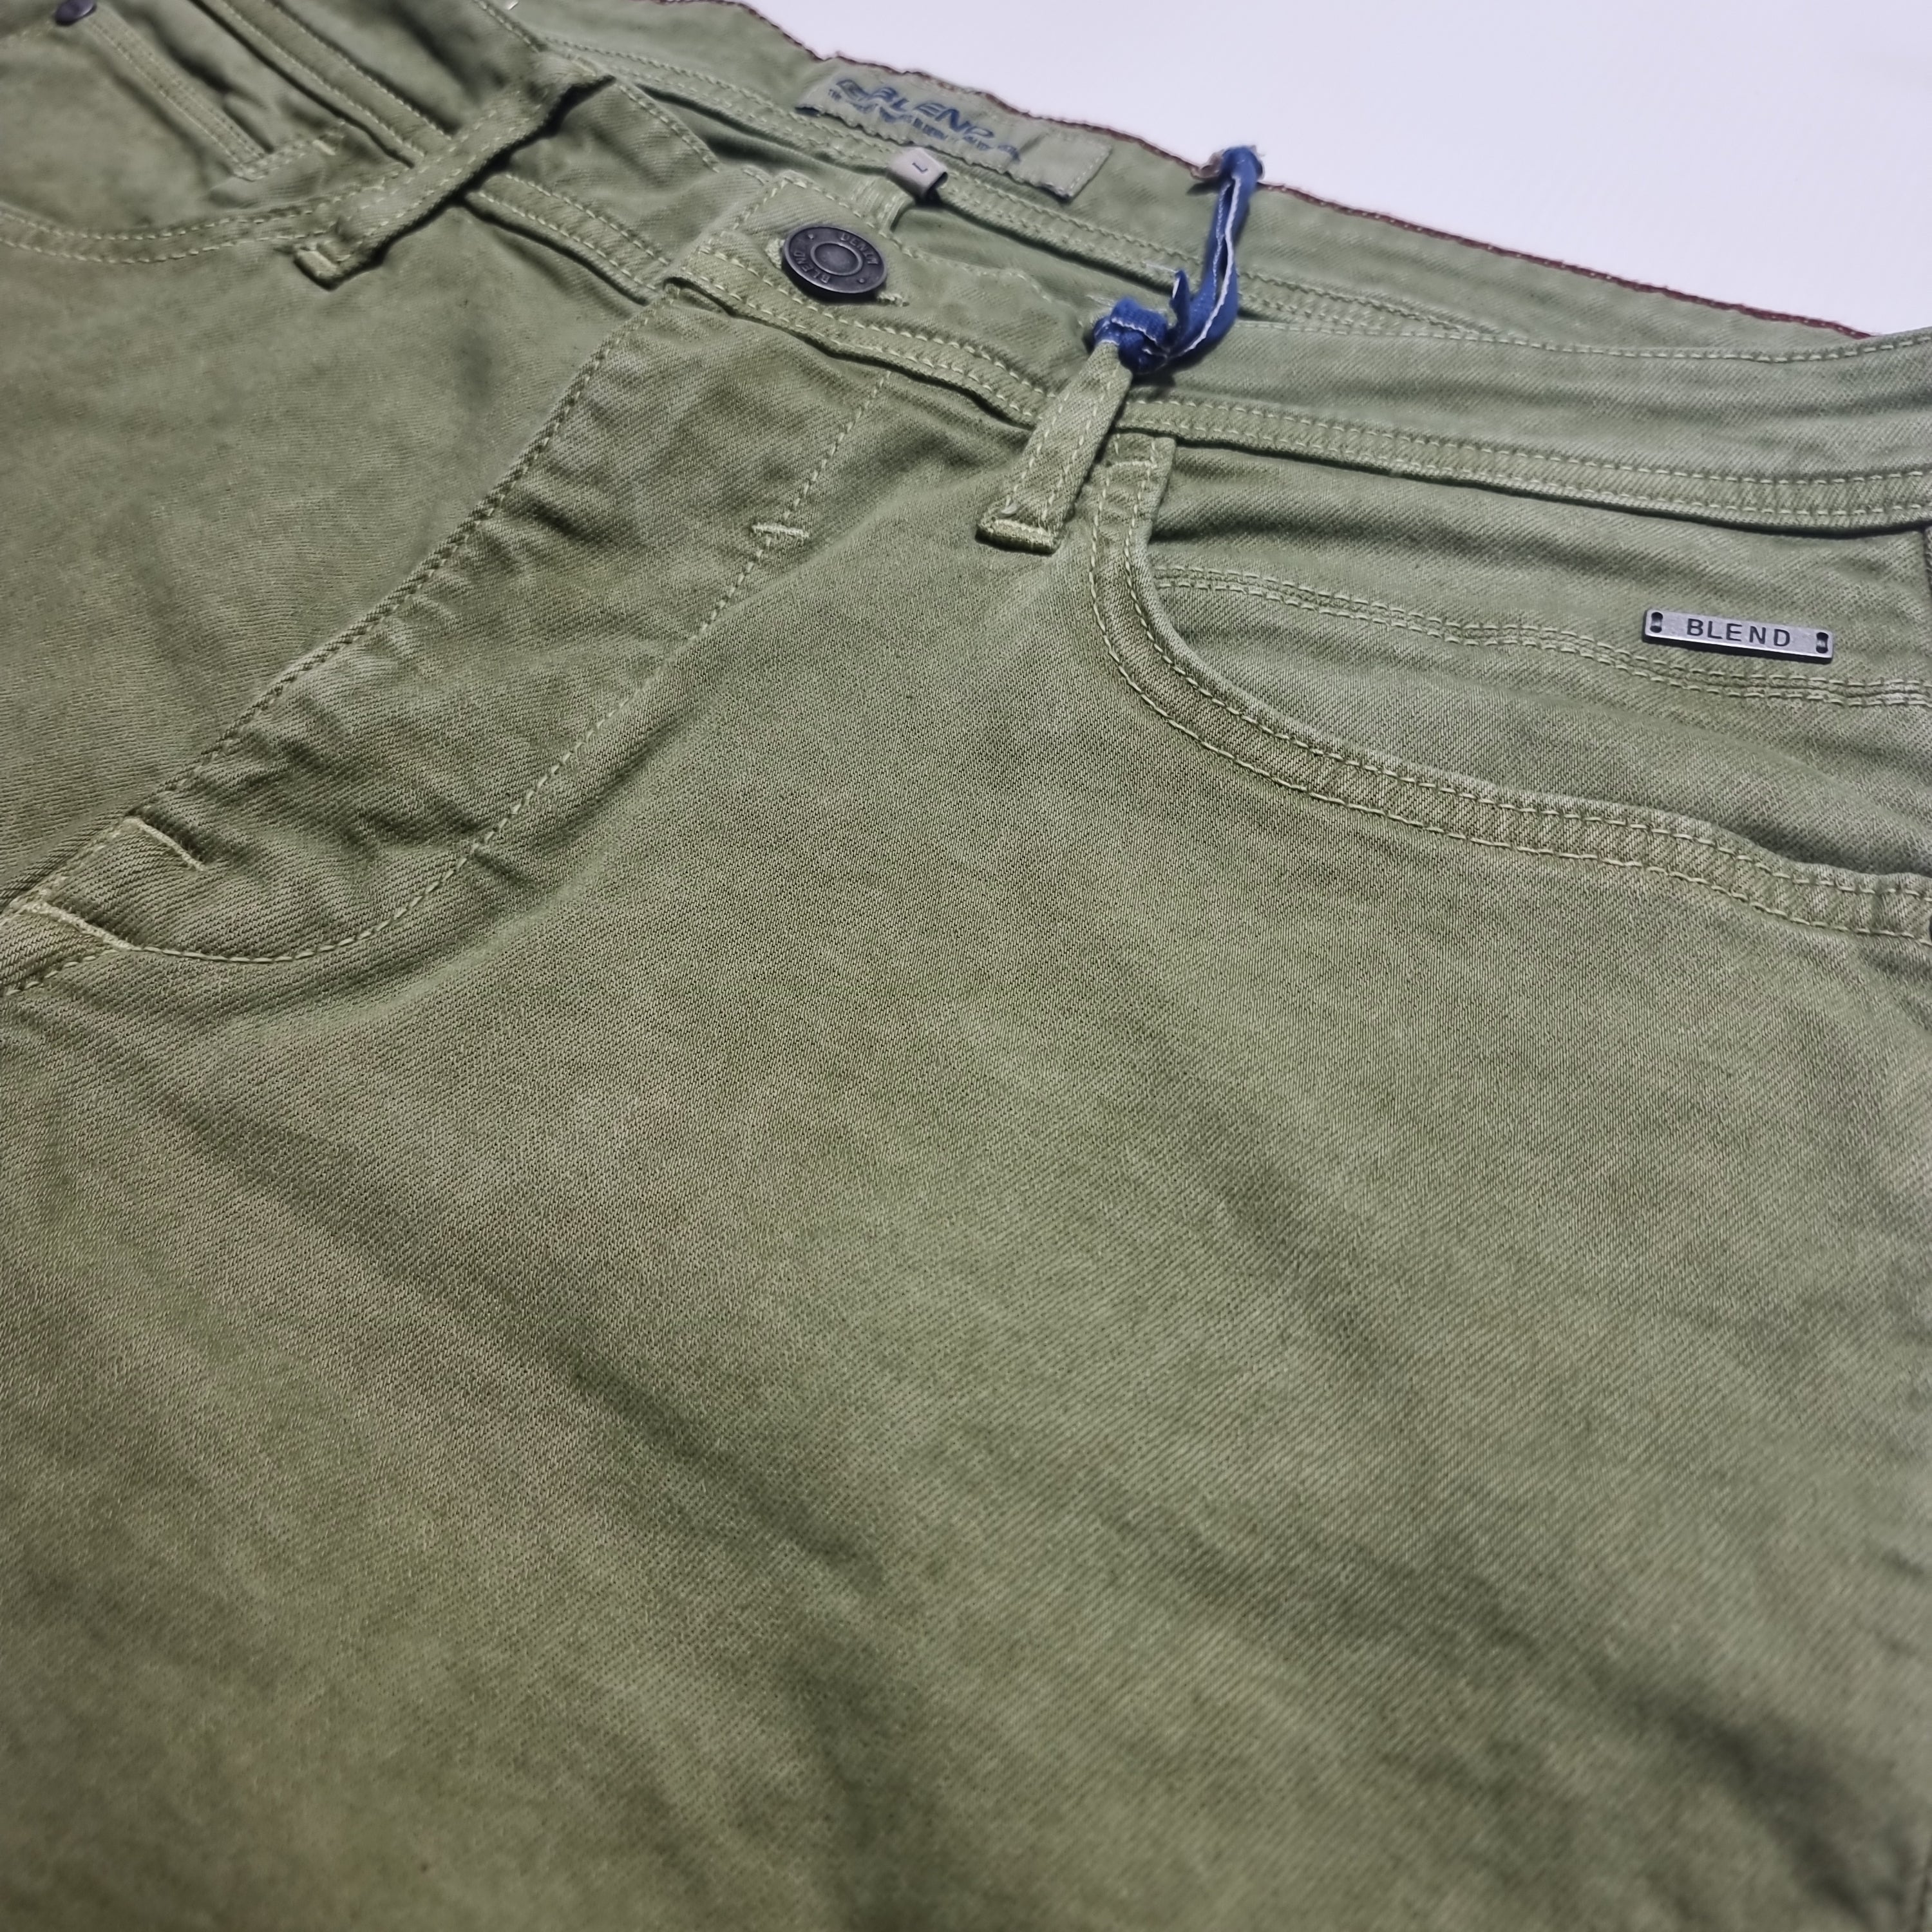 Army green denim Blend shorts